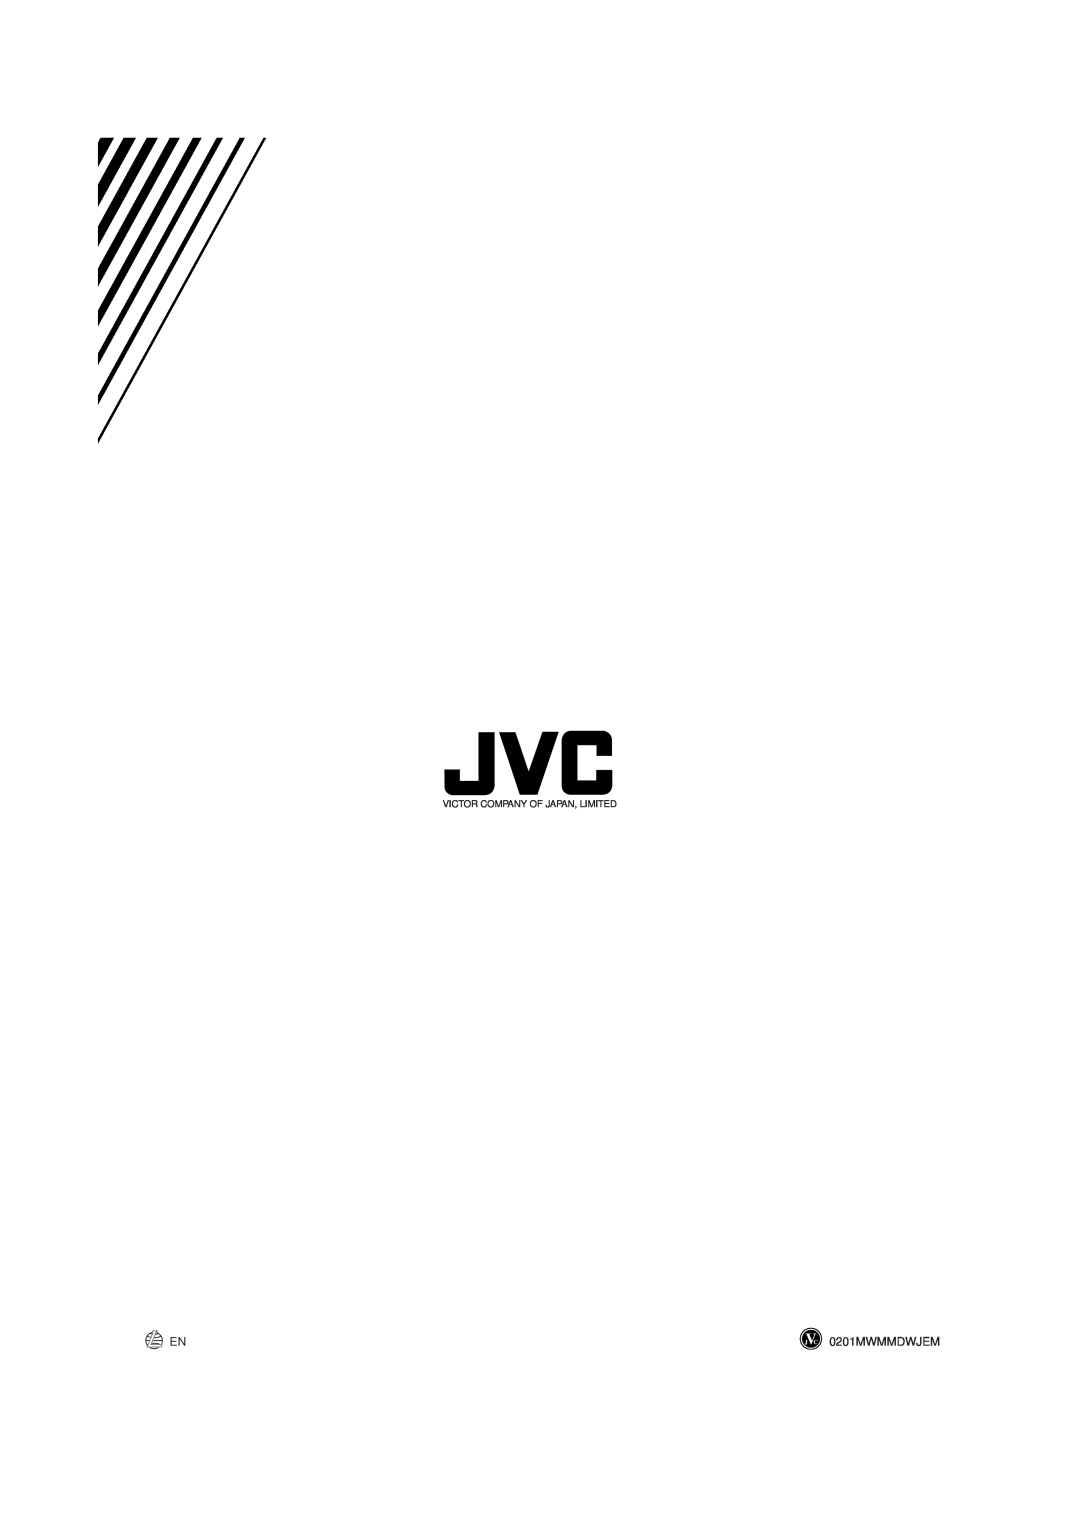 JVC GVT0052-008A manual 0201MWMMDWJEM, Victor Company Of Japan, Limited 